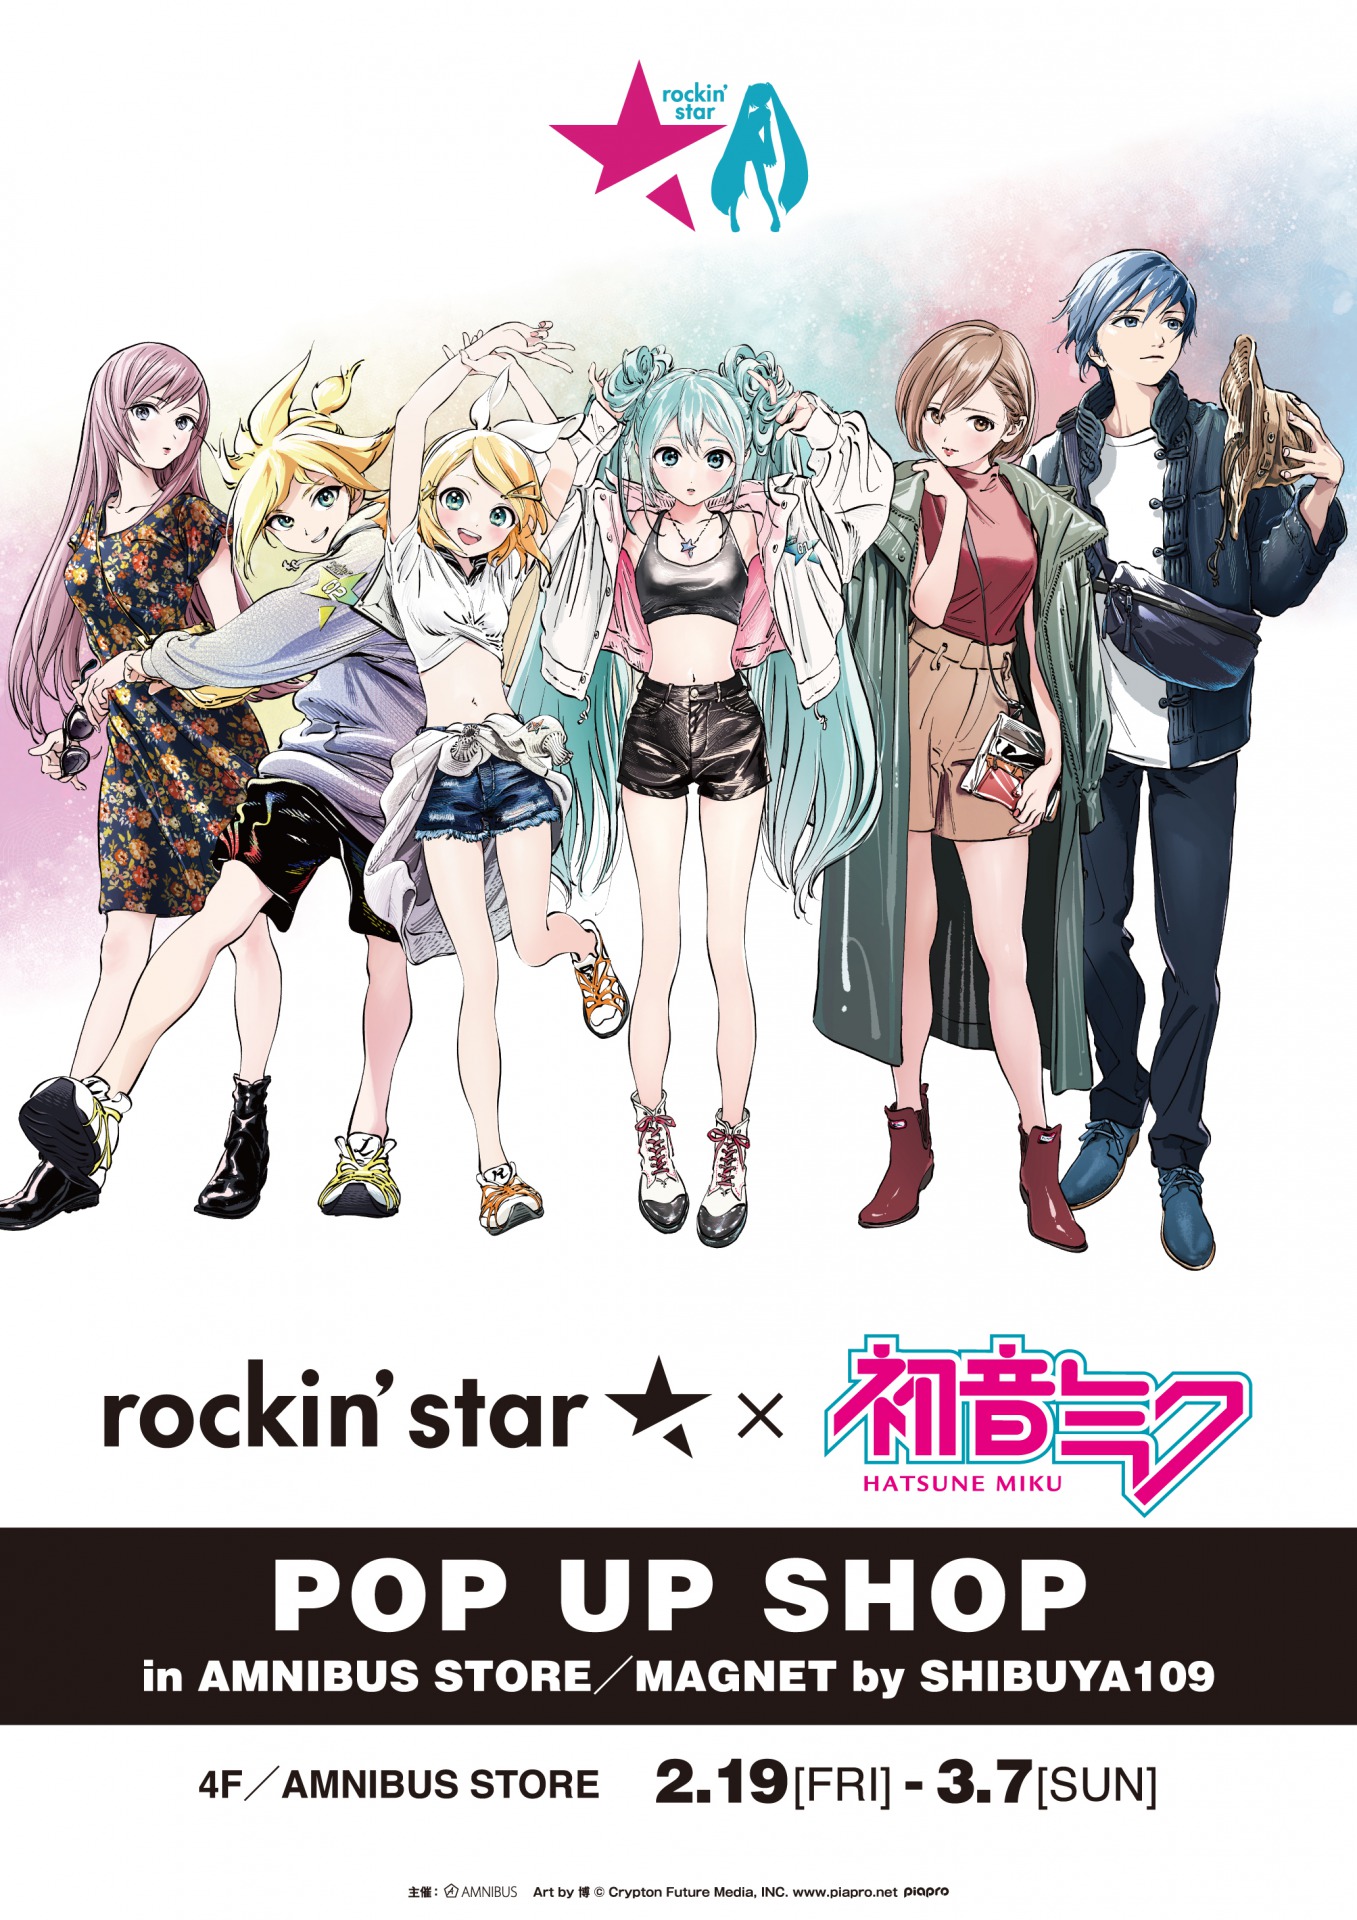 Rockin Star 初音ミク Pop Up Shop In Amnibus Store Magnet By Shibuya109 の開催が決定 株式会社arma Biancaのプレスリリース